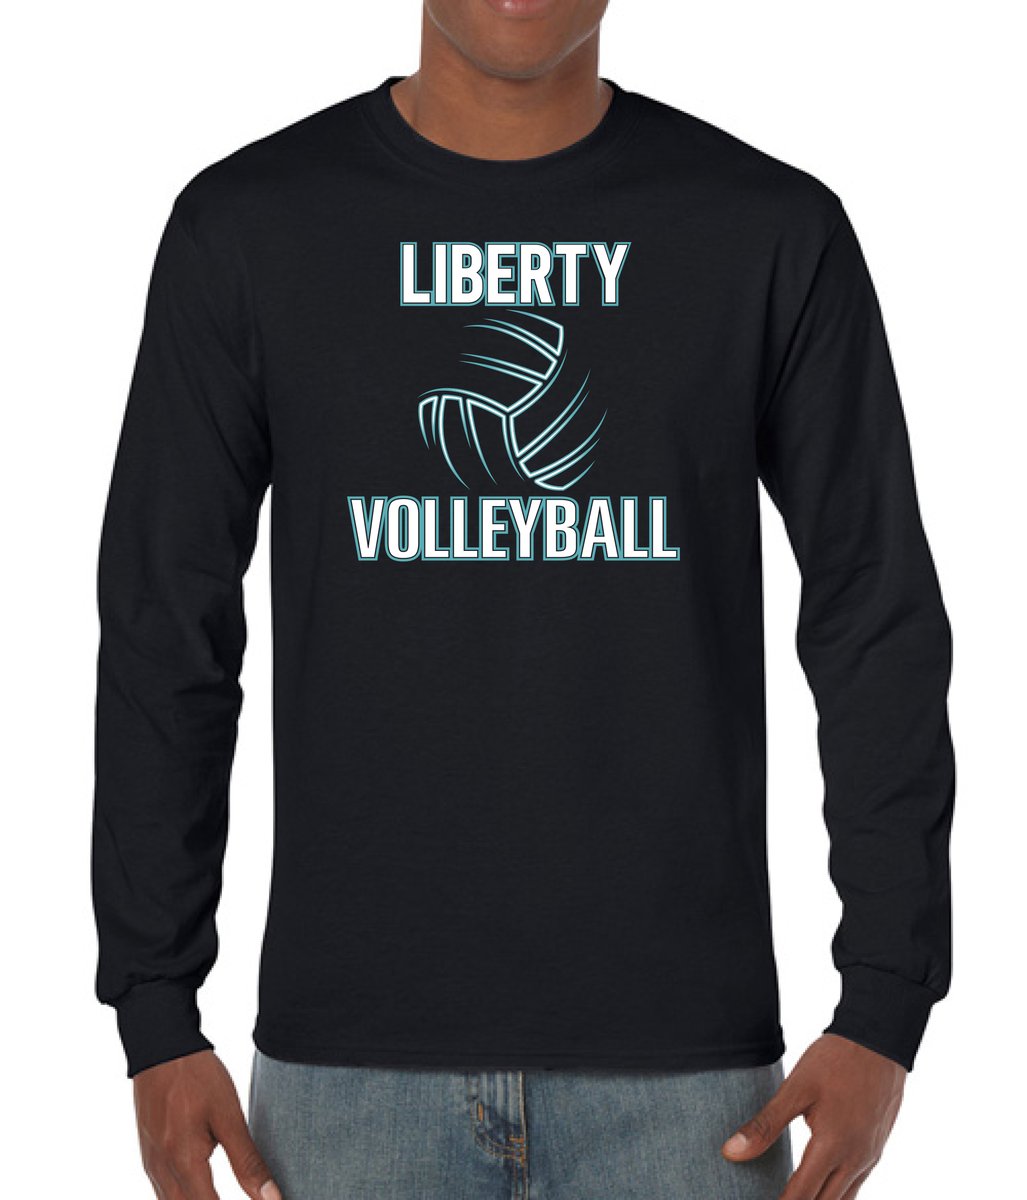 Liberty Volleyball LongSleeve | Dallas East Sports